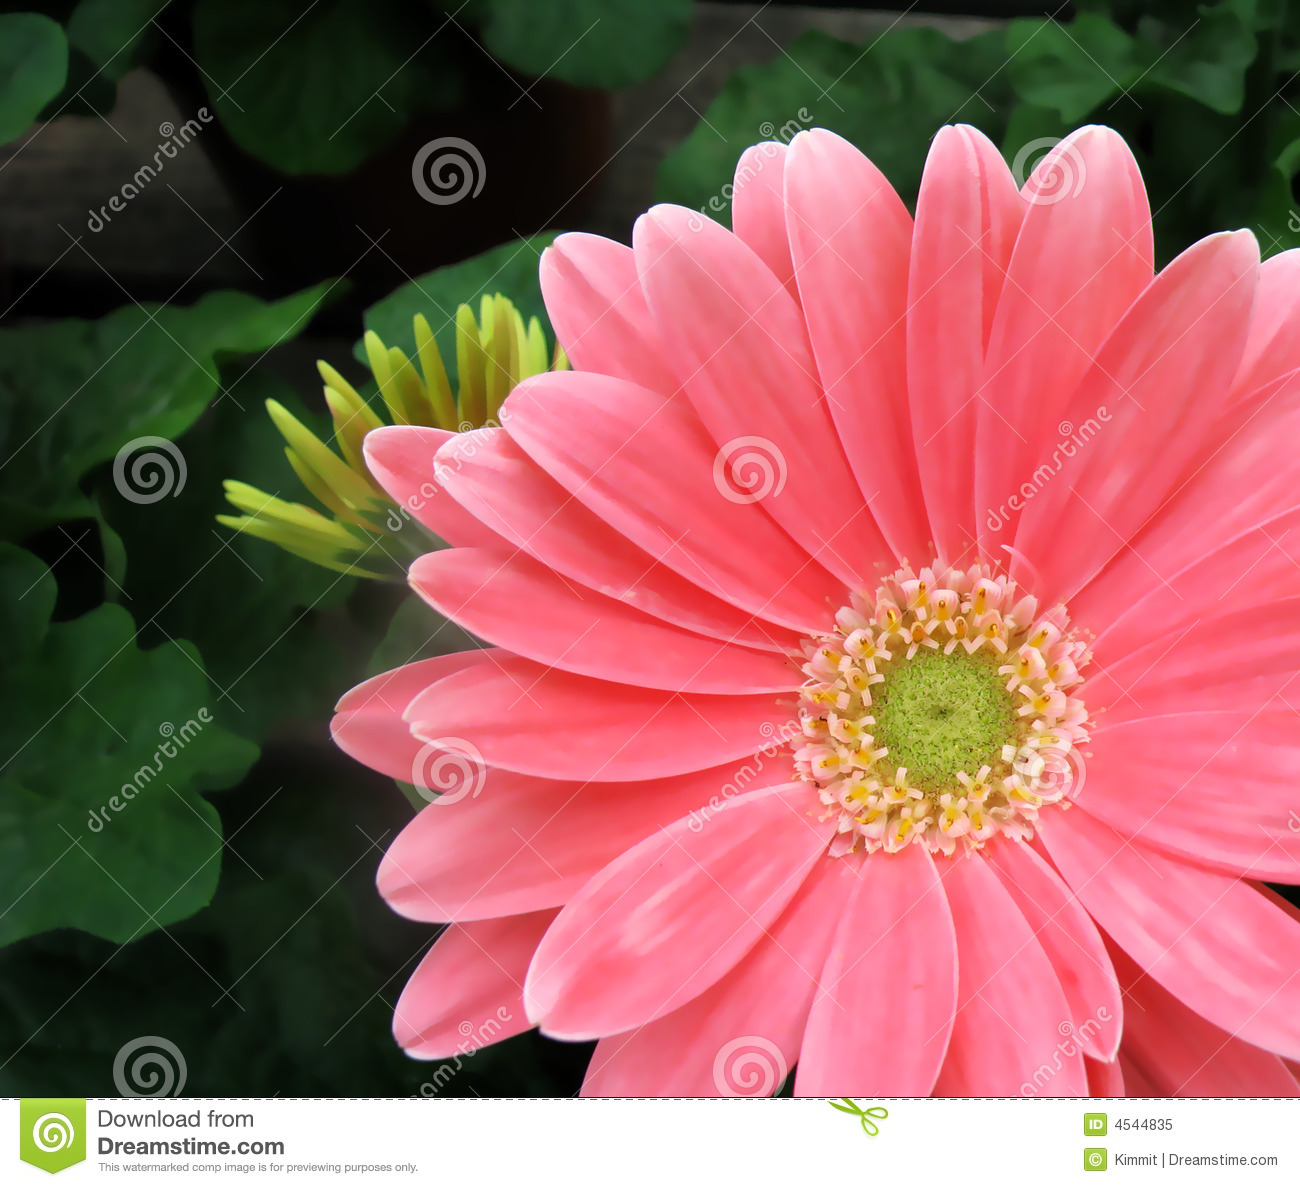 Pink gerbera daisy flower macro shot in white background